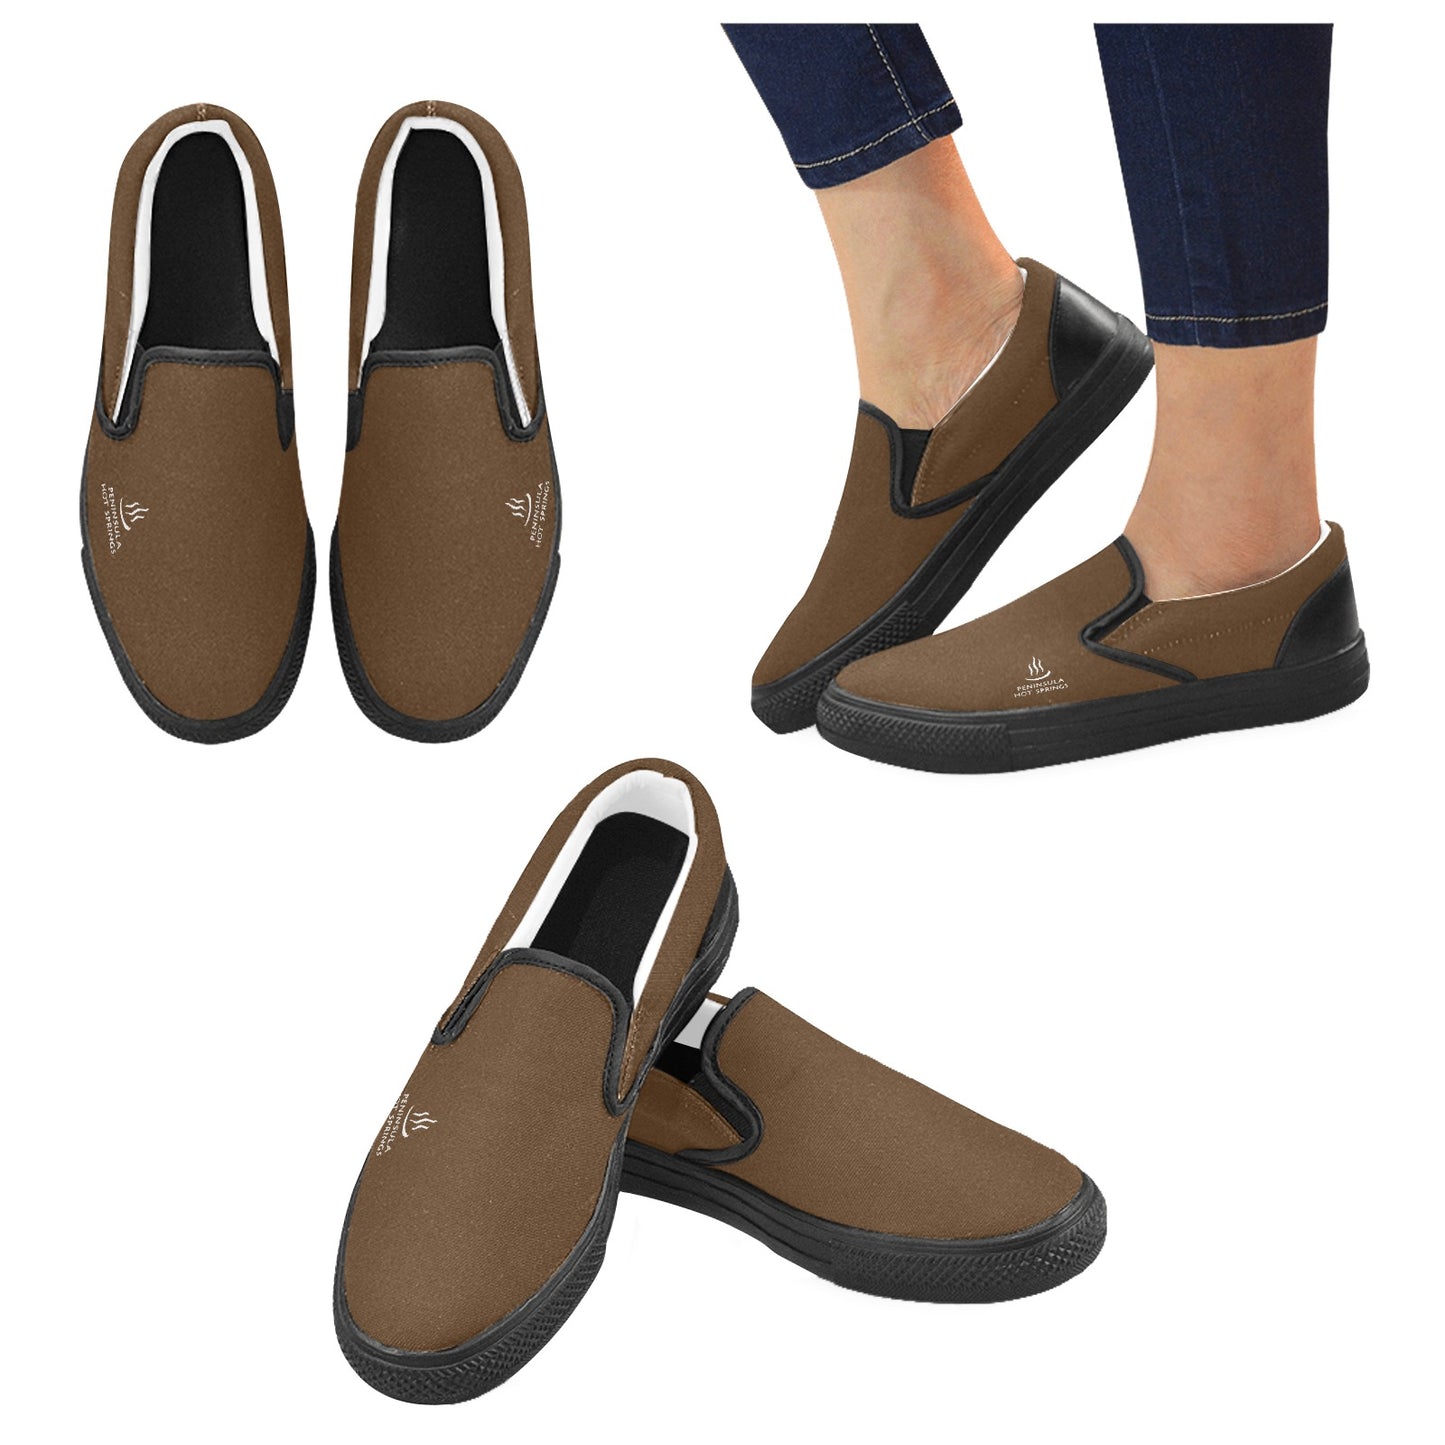 PENINSULAR HOT SPRINGS Slip-on Canvas Men's Shoes